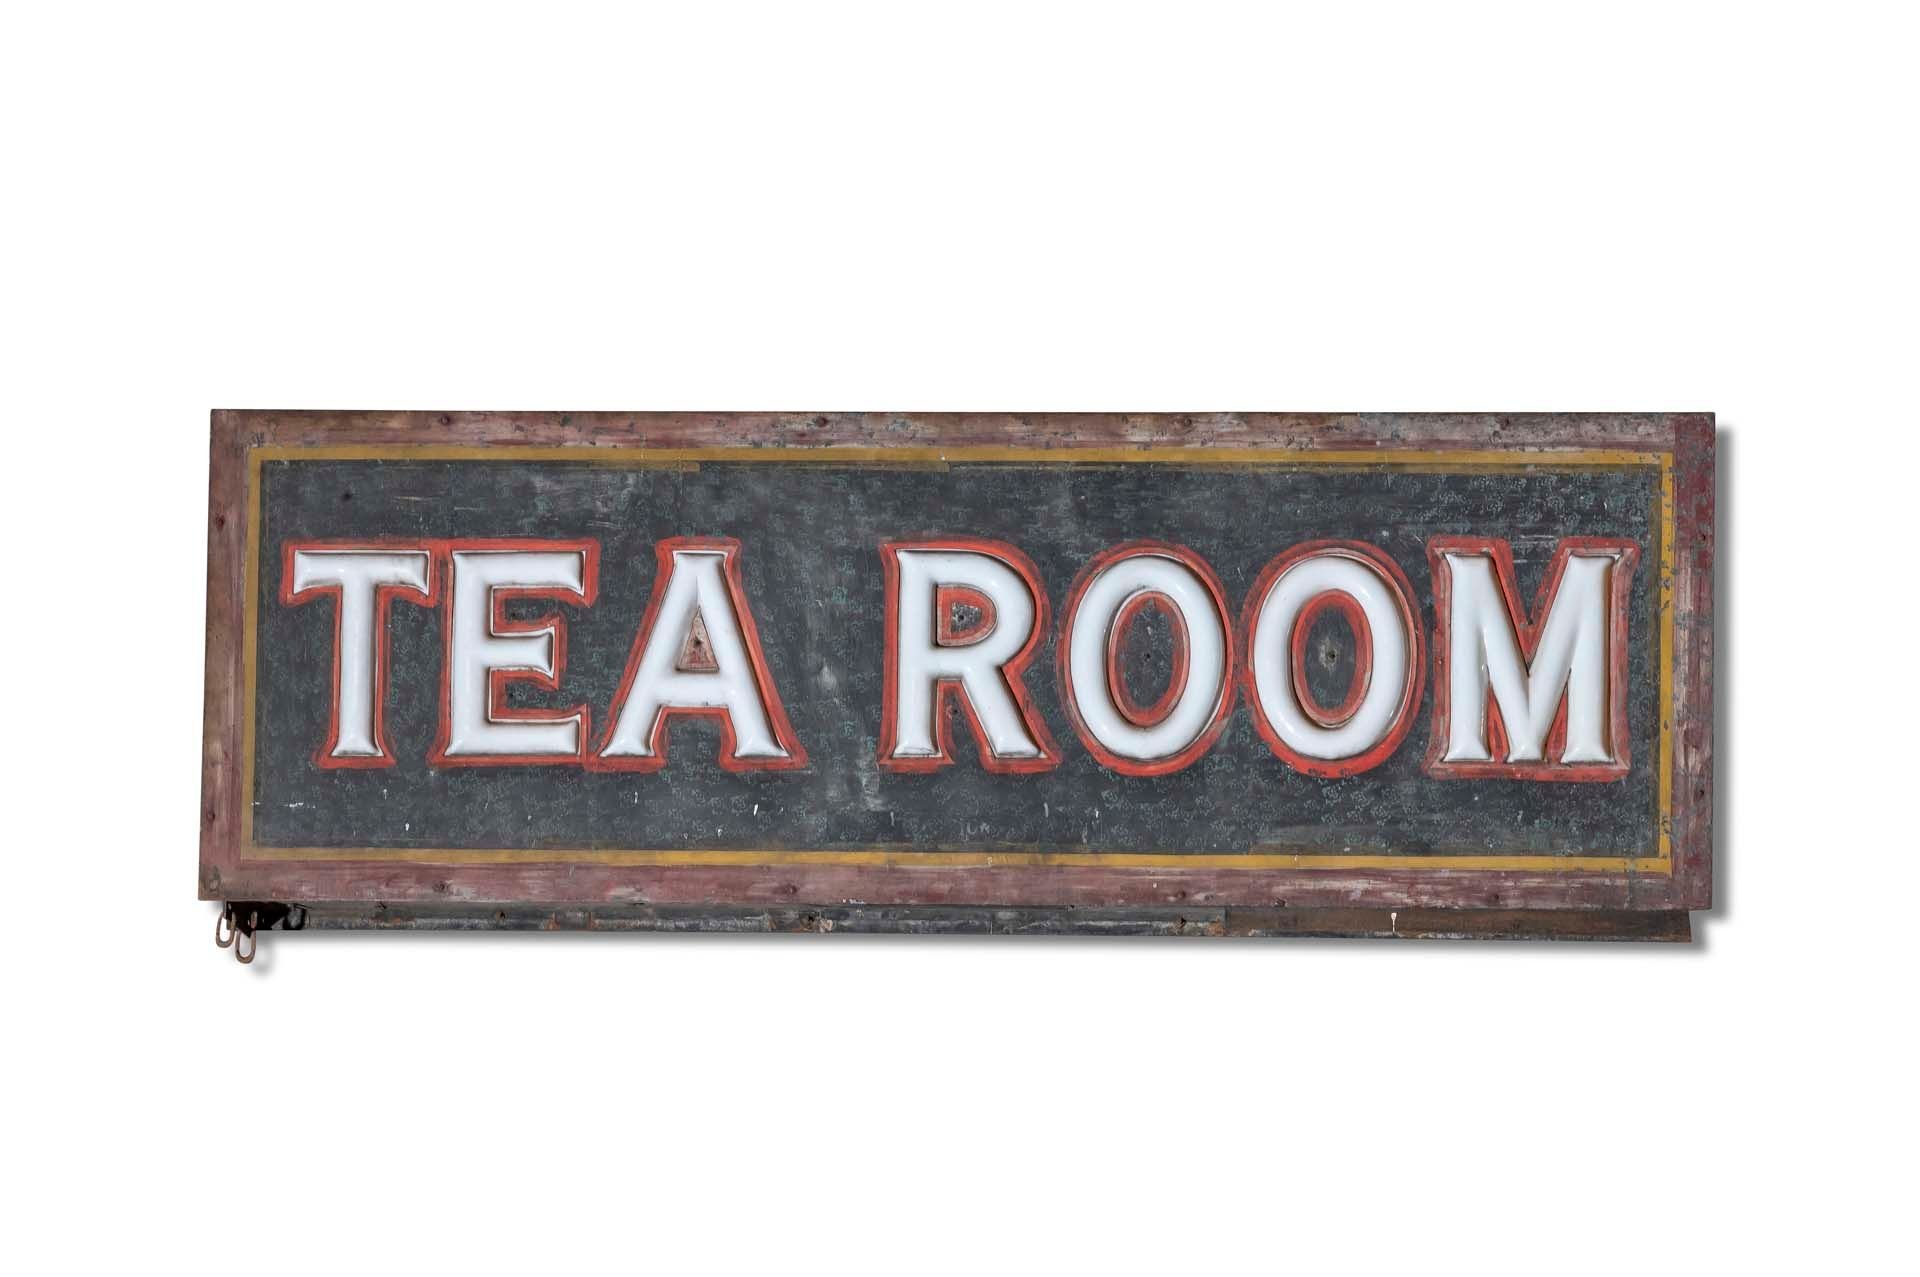 For Sale Tea Room' Lighted Metal Sign